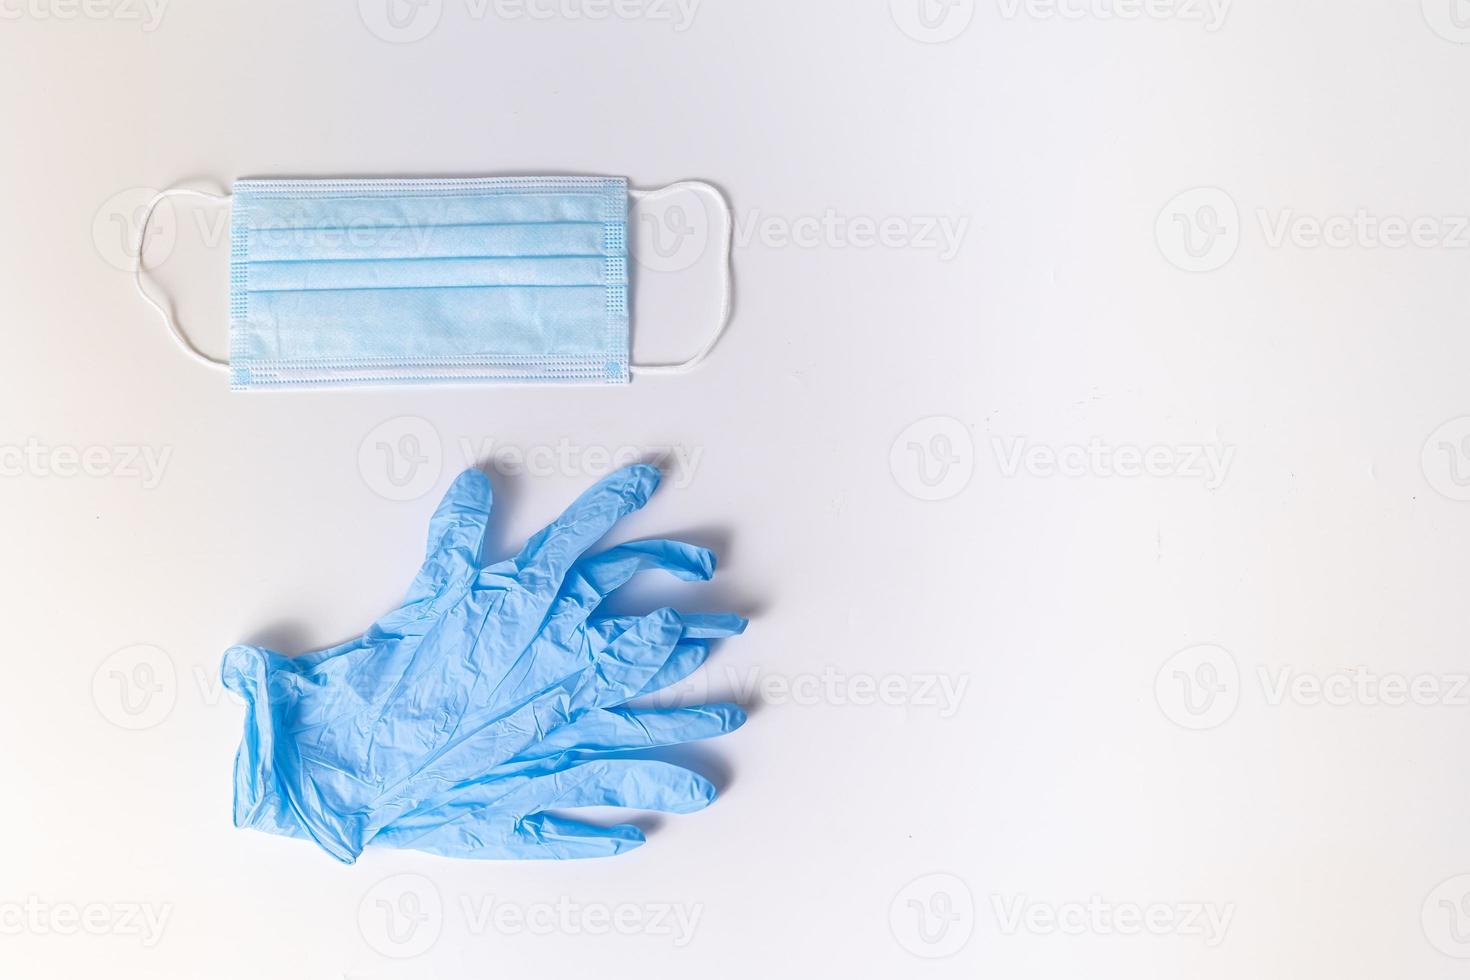 mascarilla quirúrgica y guantes de nitrilo foto